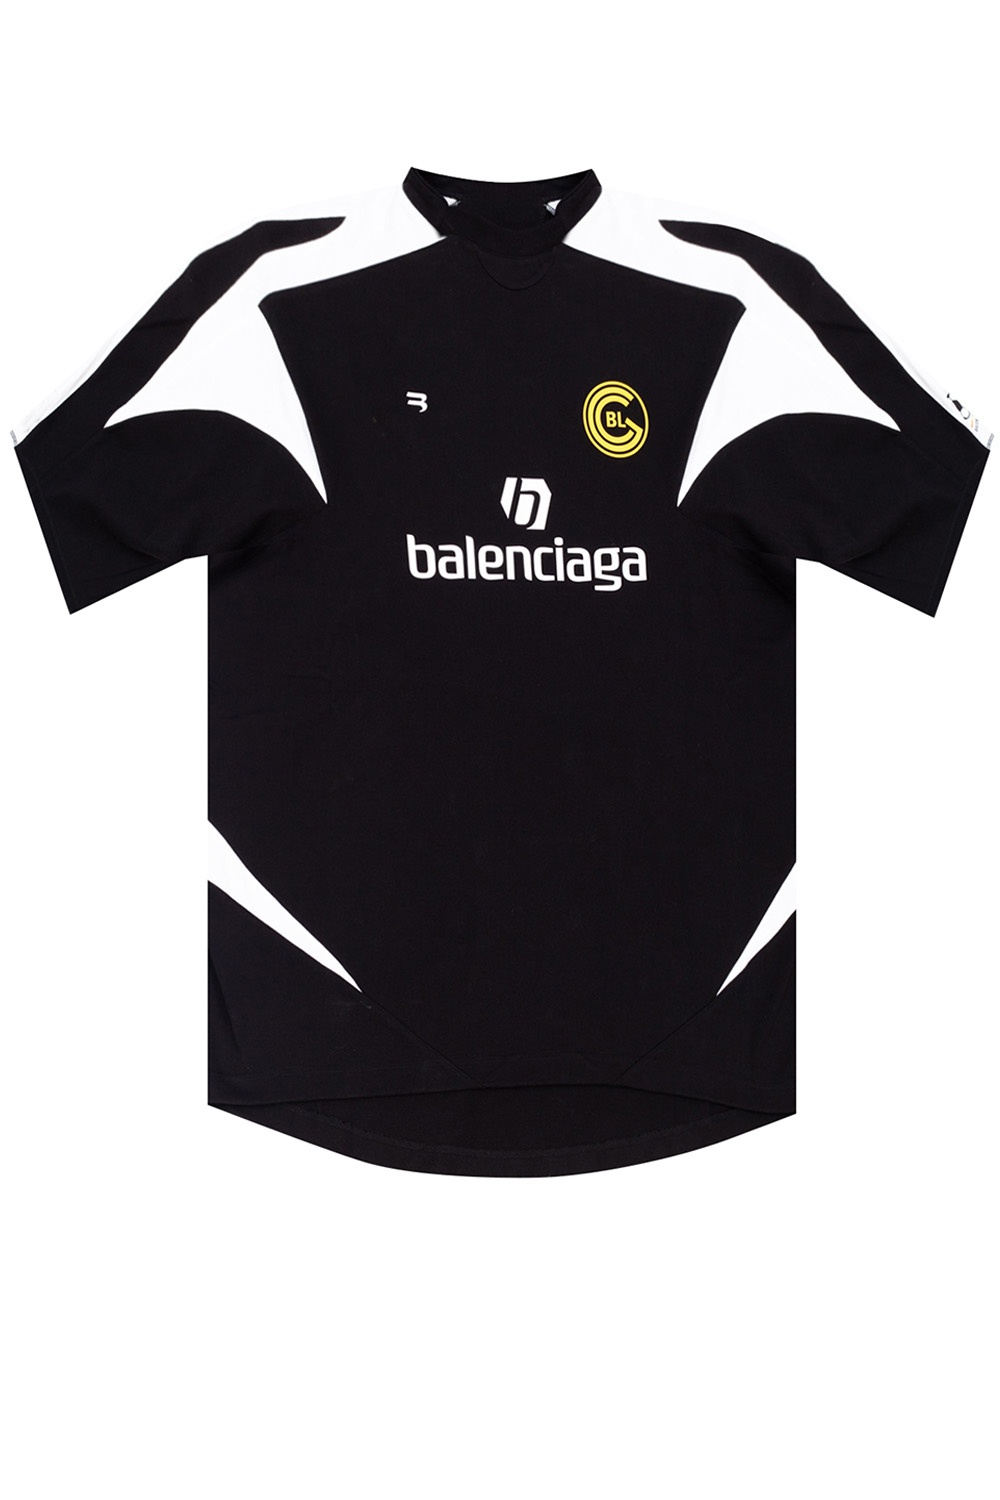 balenciaga Logo embroidery Tshirt available on wwwjulianfashioncom   242592  CO